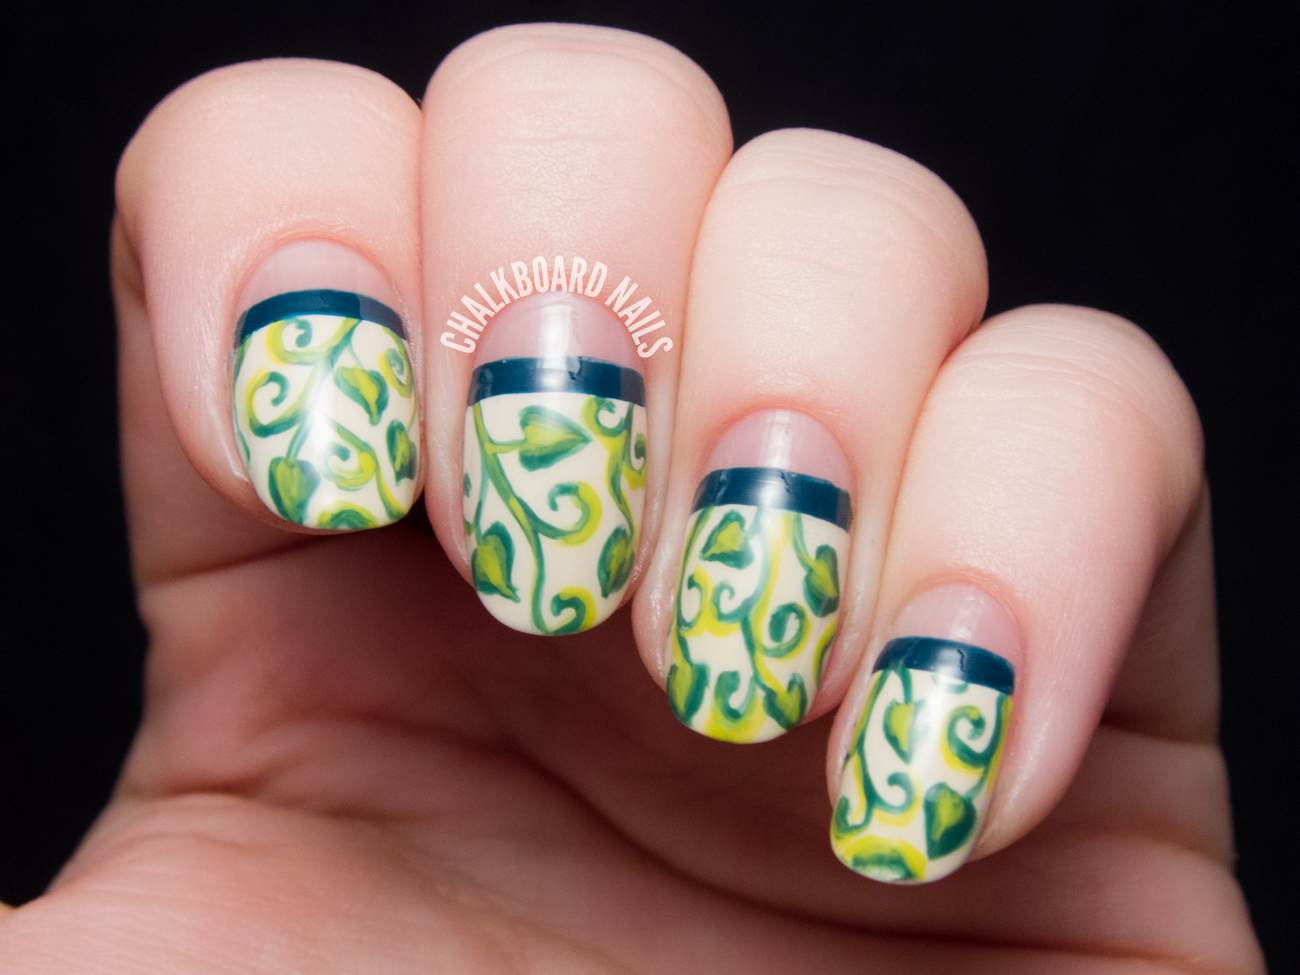 Ivy blocking nail art by @chalkboardnails